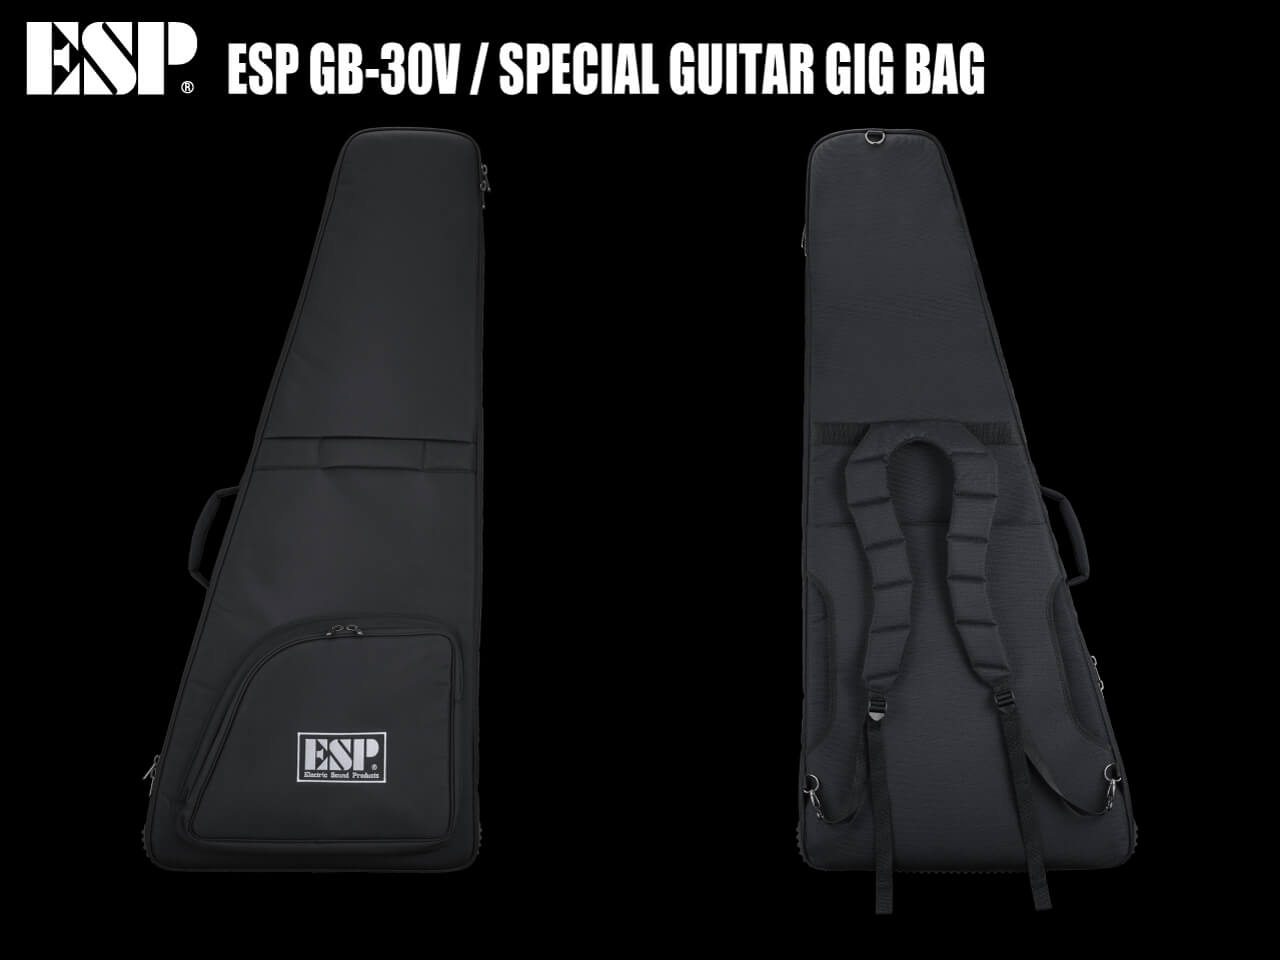 ESP(イーエスピー) SPECIAL GUITAR GIG BAG / GB-30V (変形ギター用ギグケース)